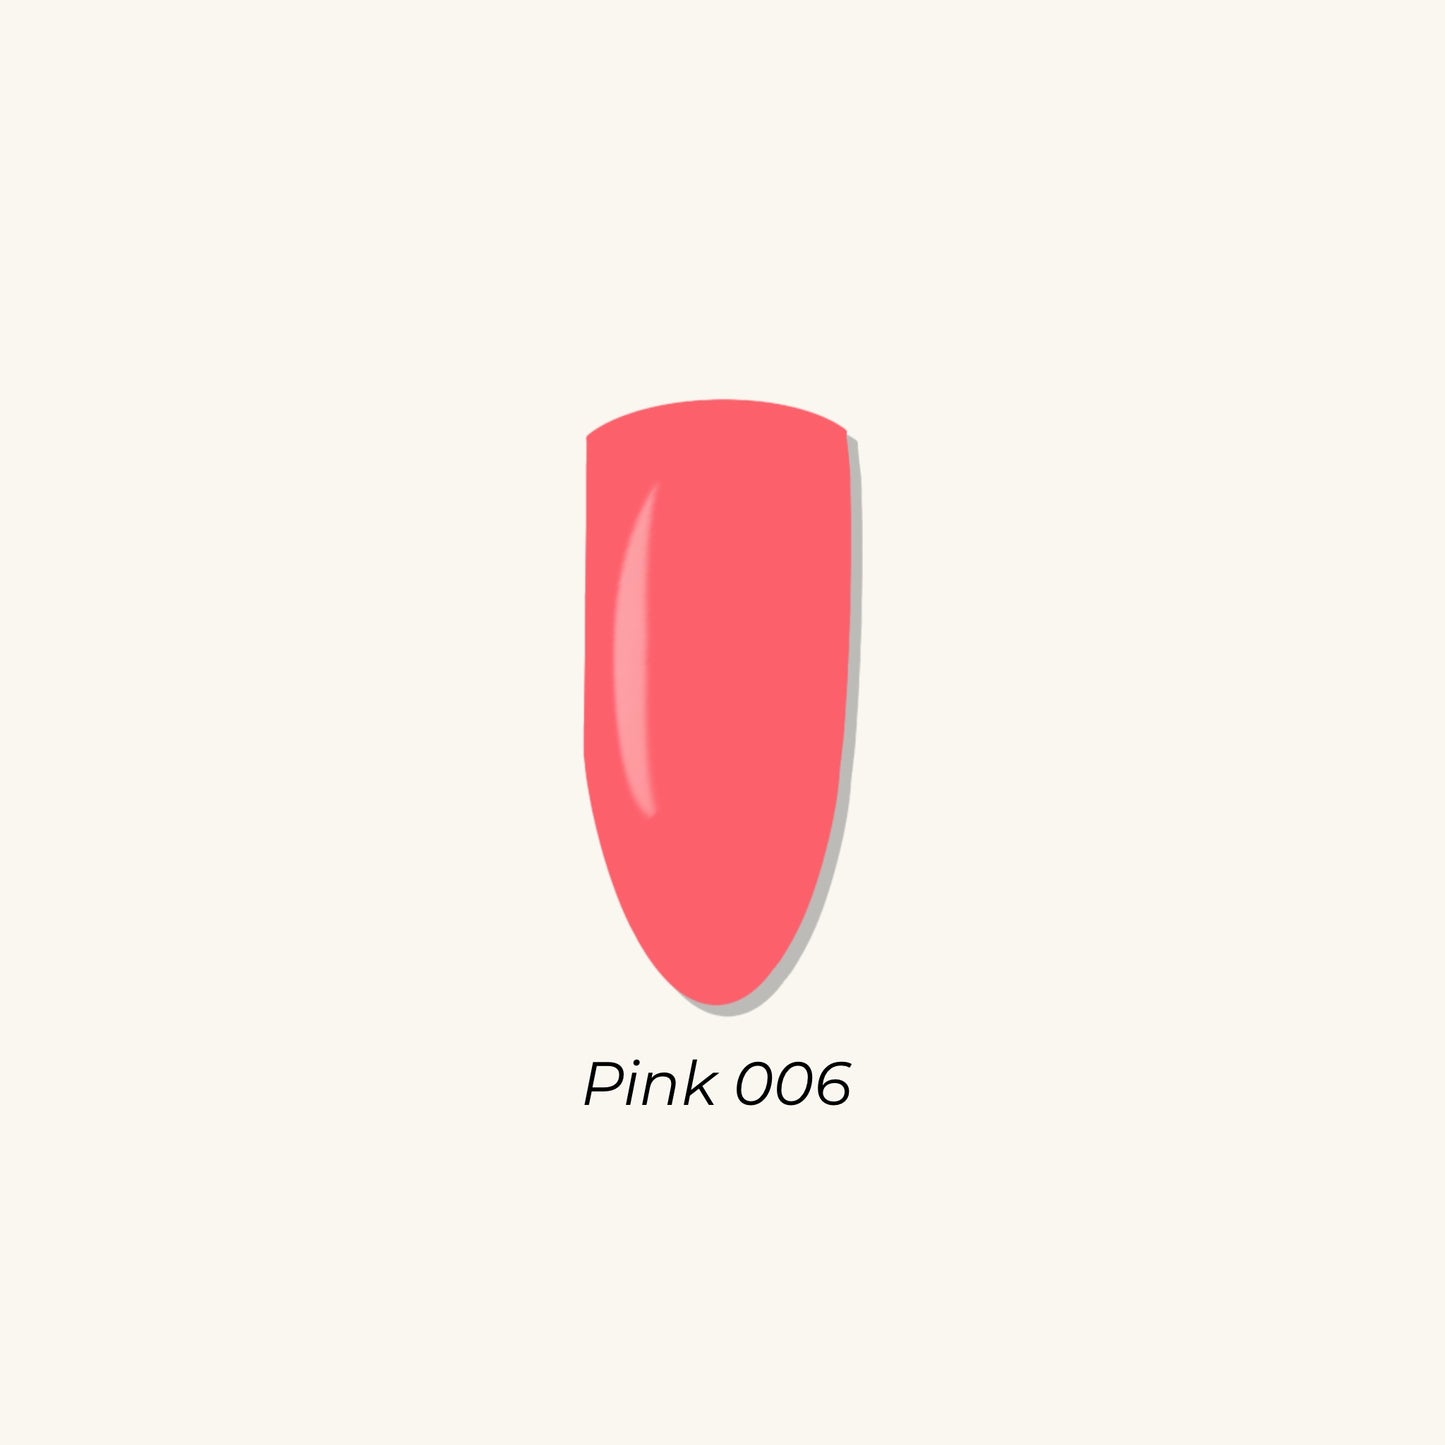 Pink 006